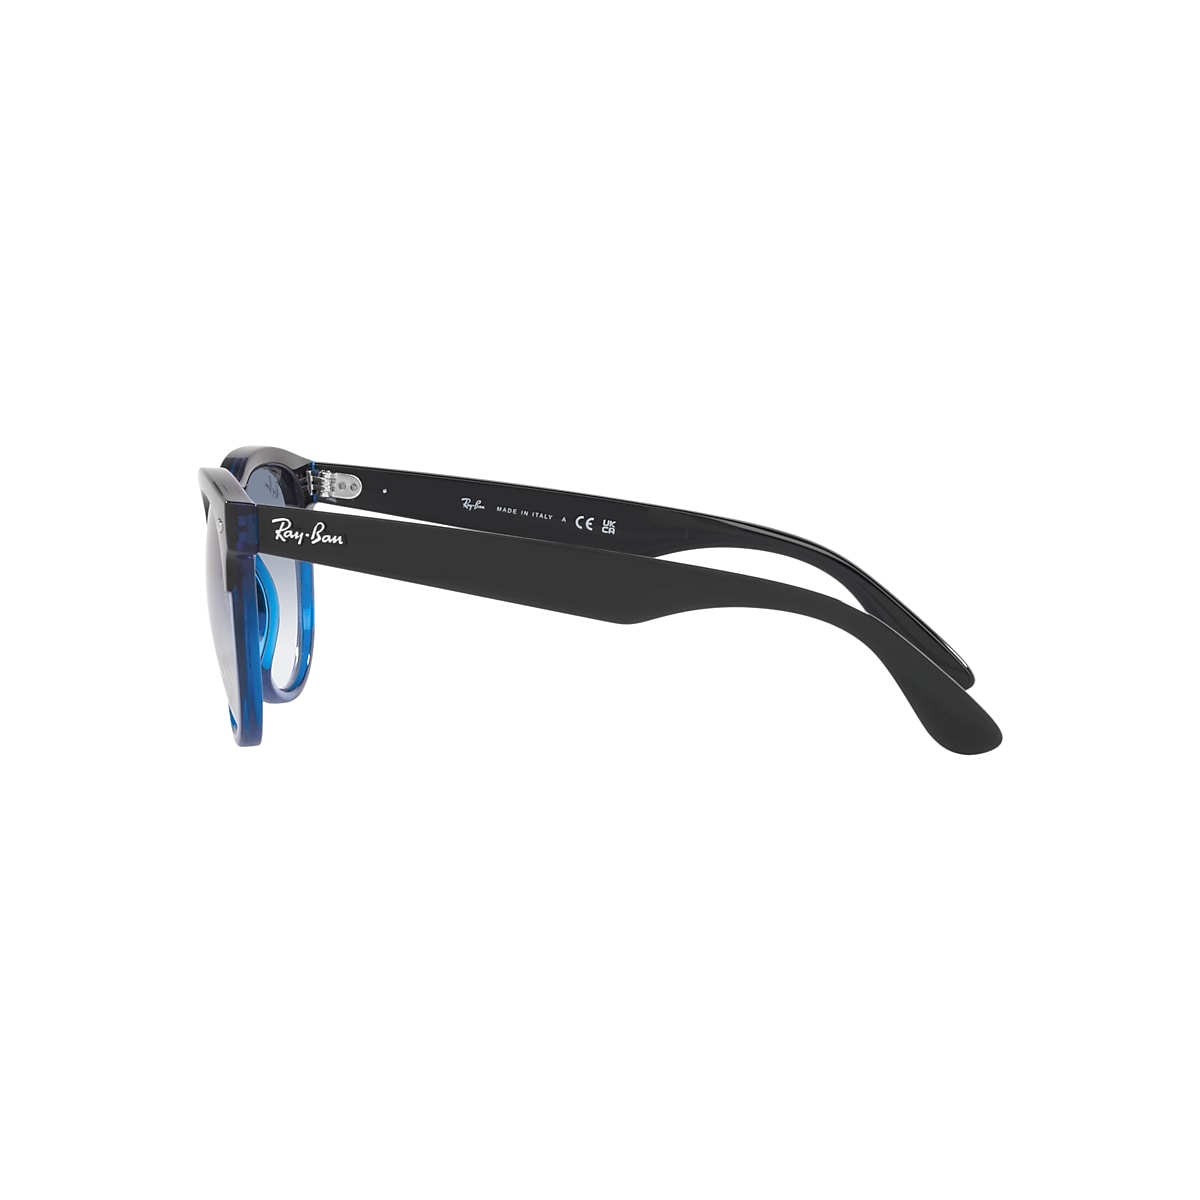 RAY-BAN RB4471 Iris Black On Blue - Unisex Sunglasses, Blue Lens